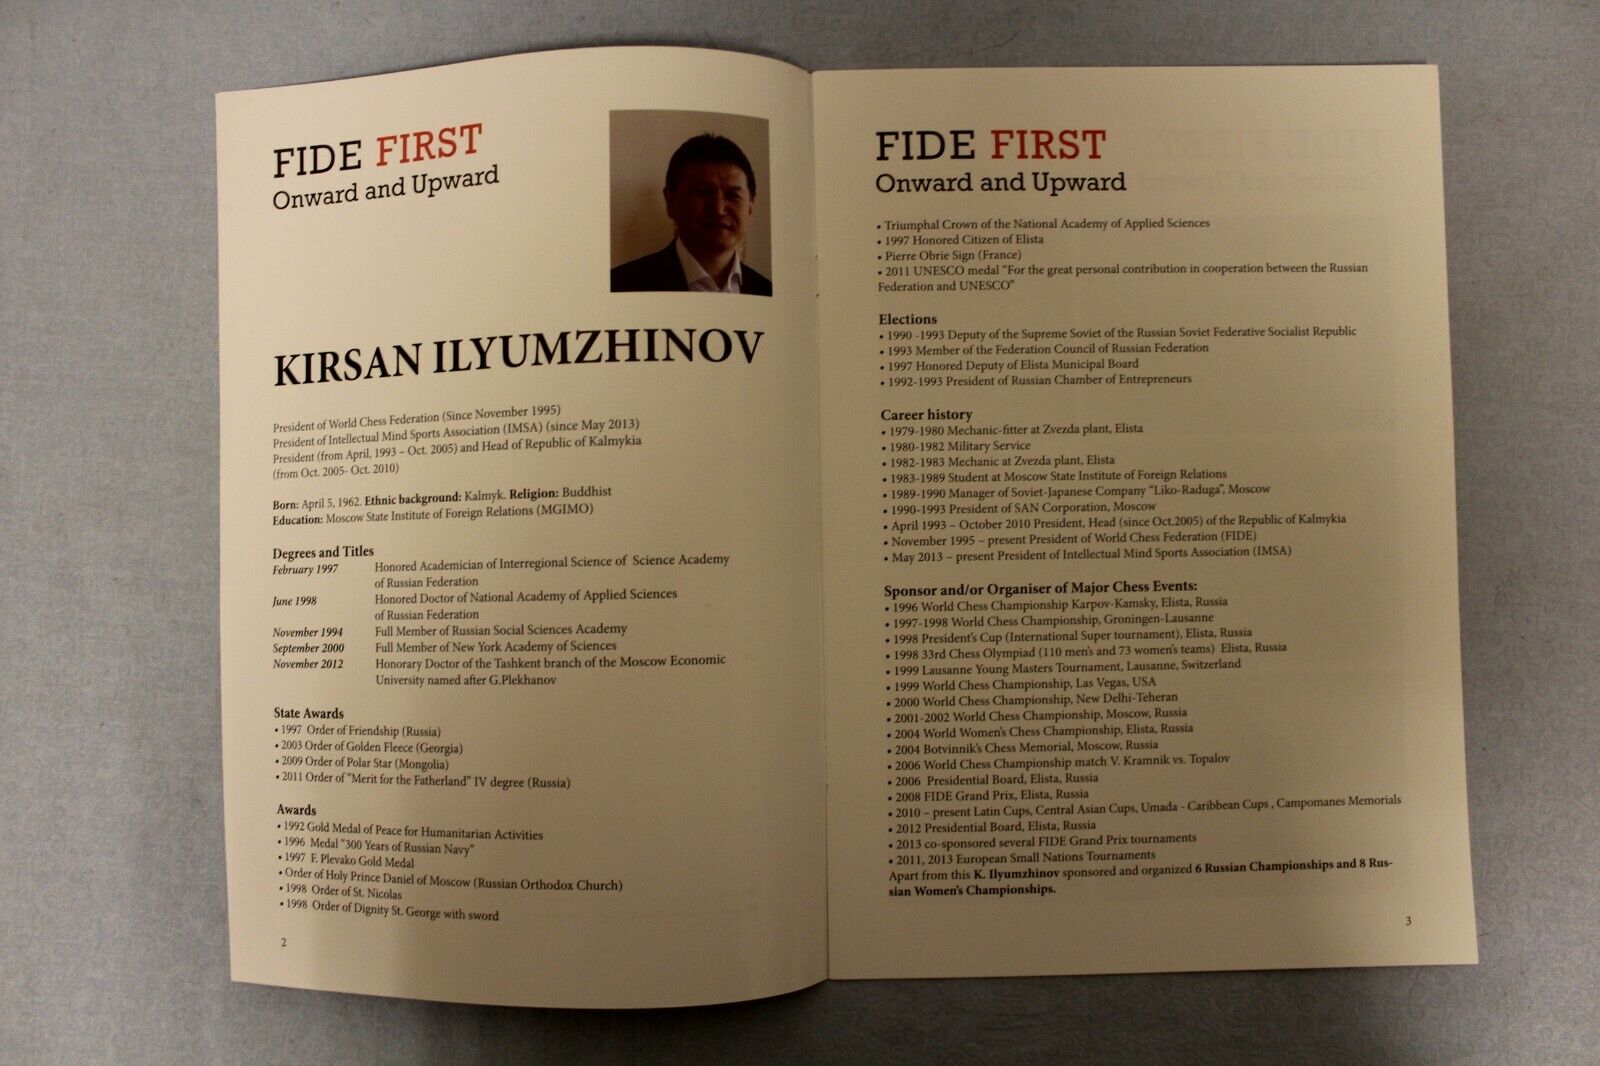 10688.2 Grand Booklets about Kirsan Ilyumzhinov. FIDE First Onward and Upward